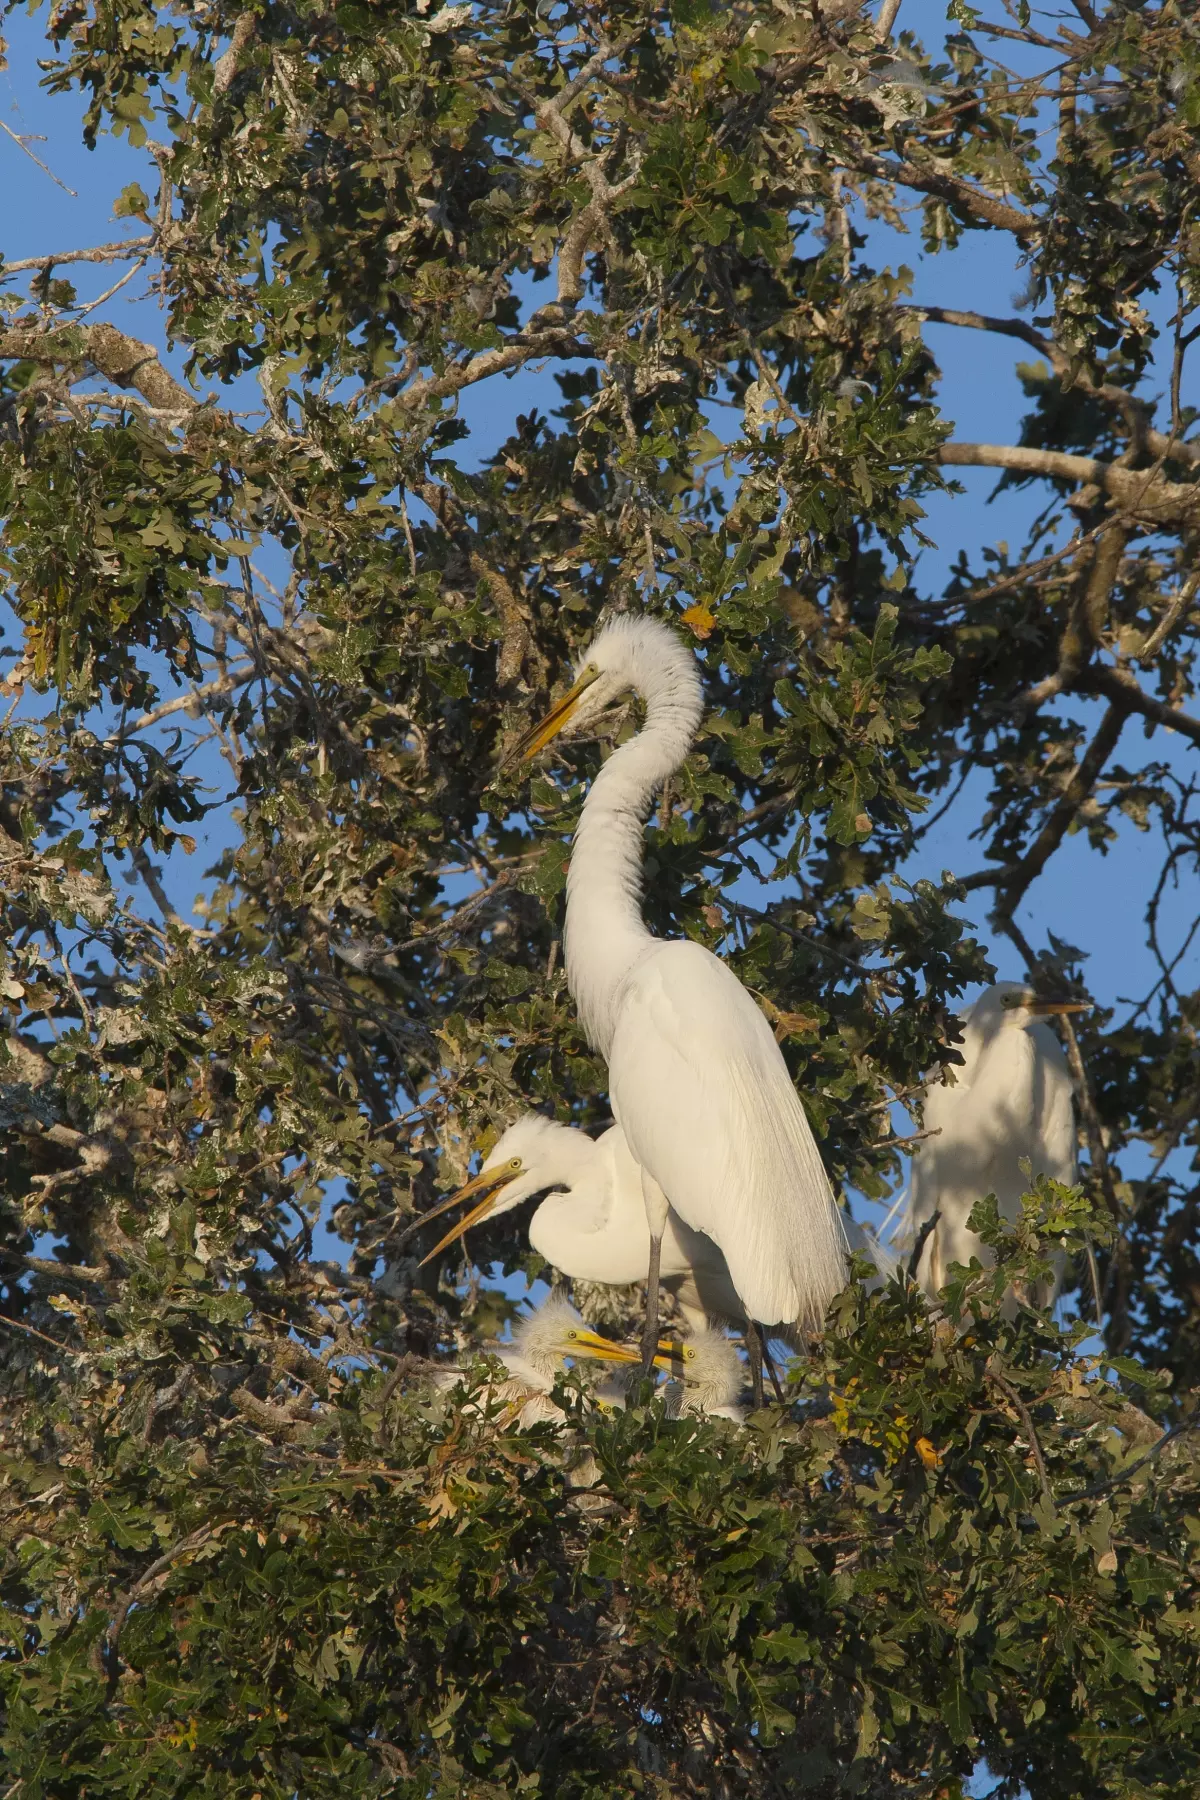 Great Egret (Ardea Alba)